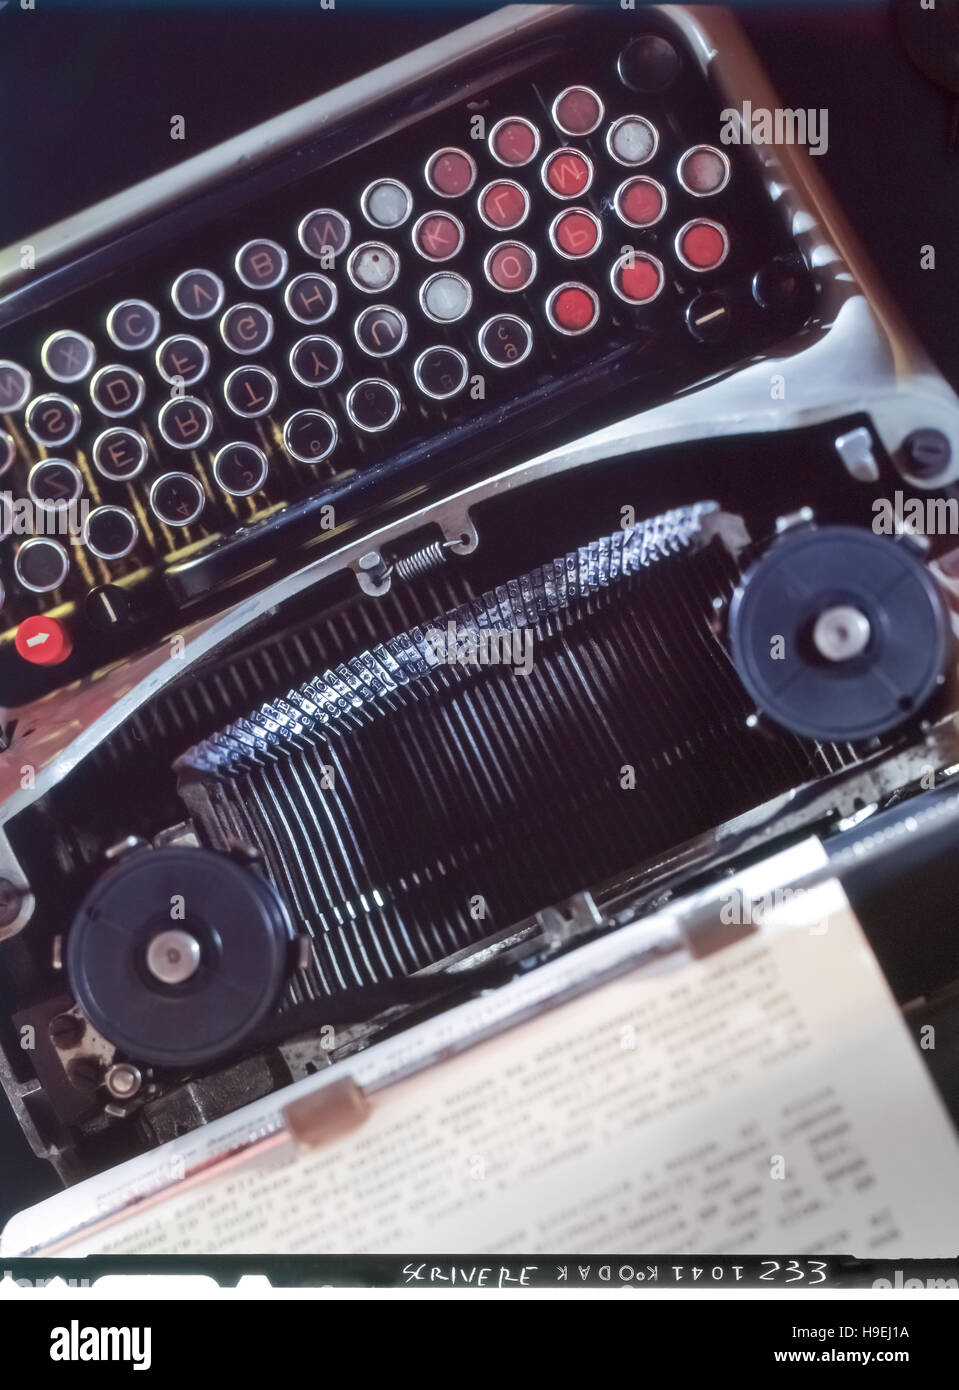 Diapositiva escaneada analógico antiguo de una máquina de escribir con detalle hoja de papel Foto de stock